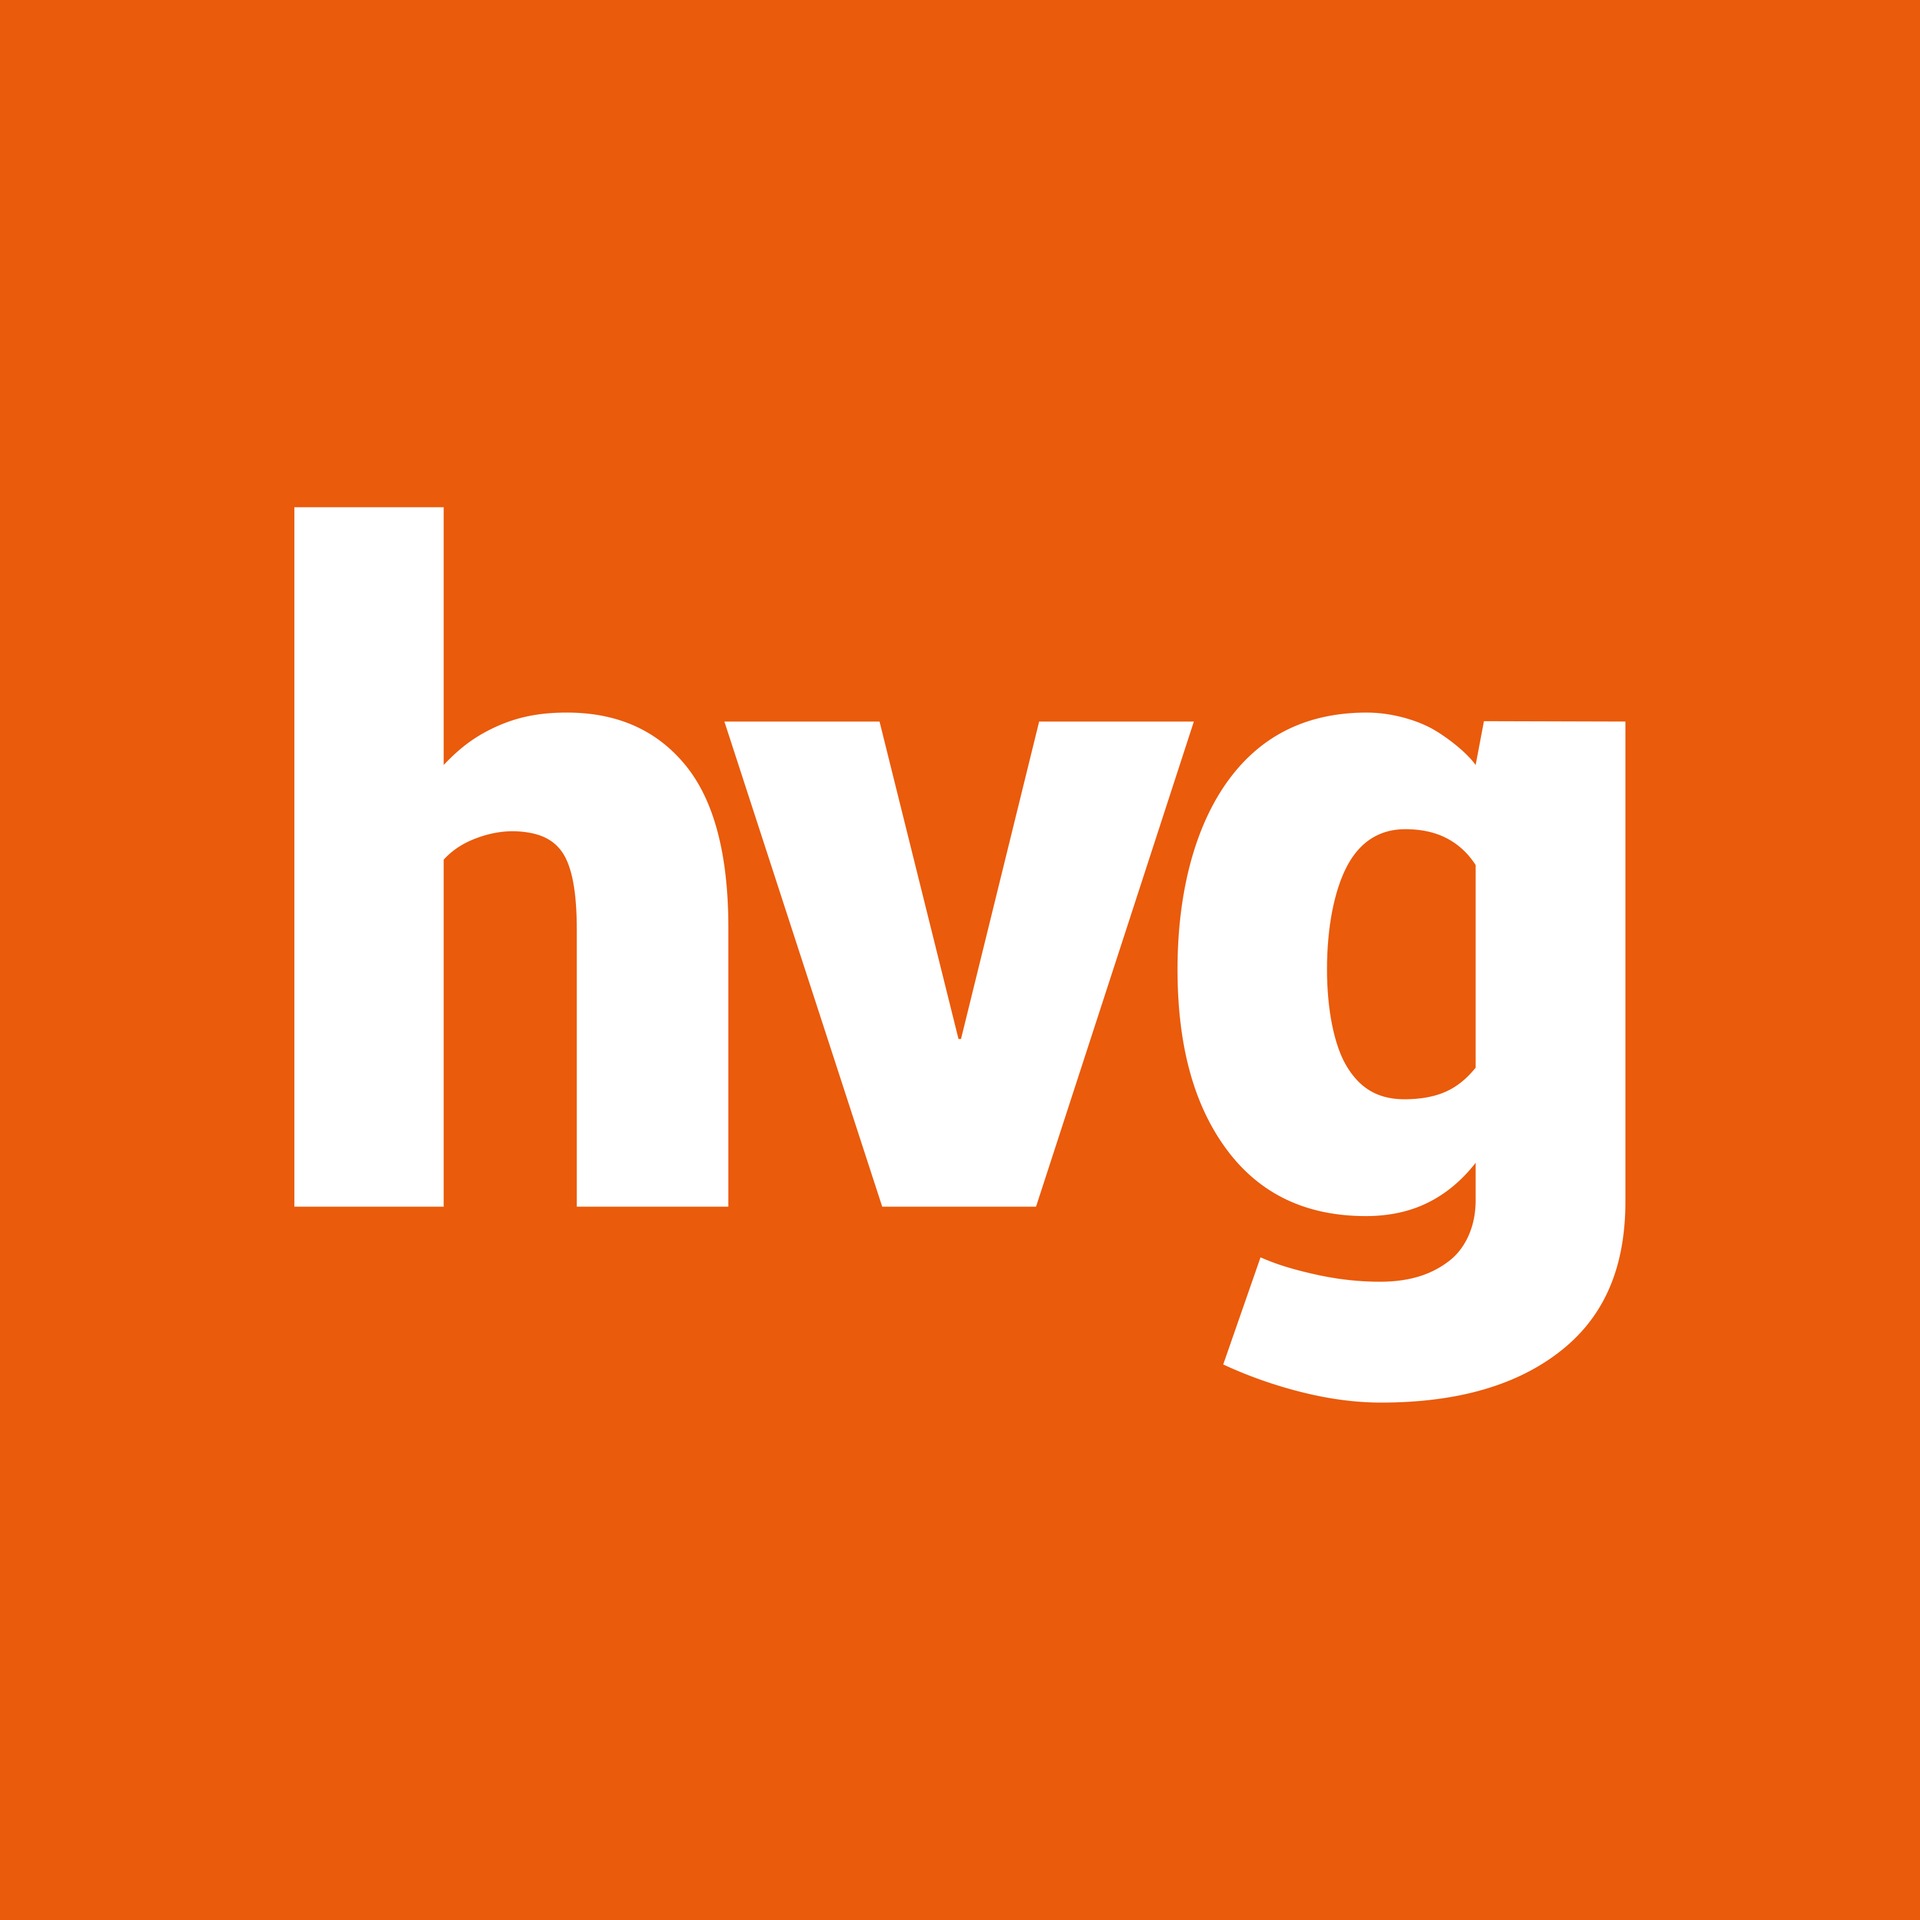 hvg logo